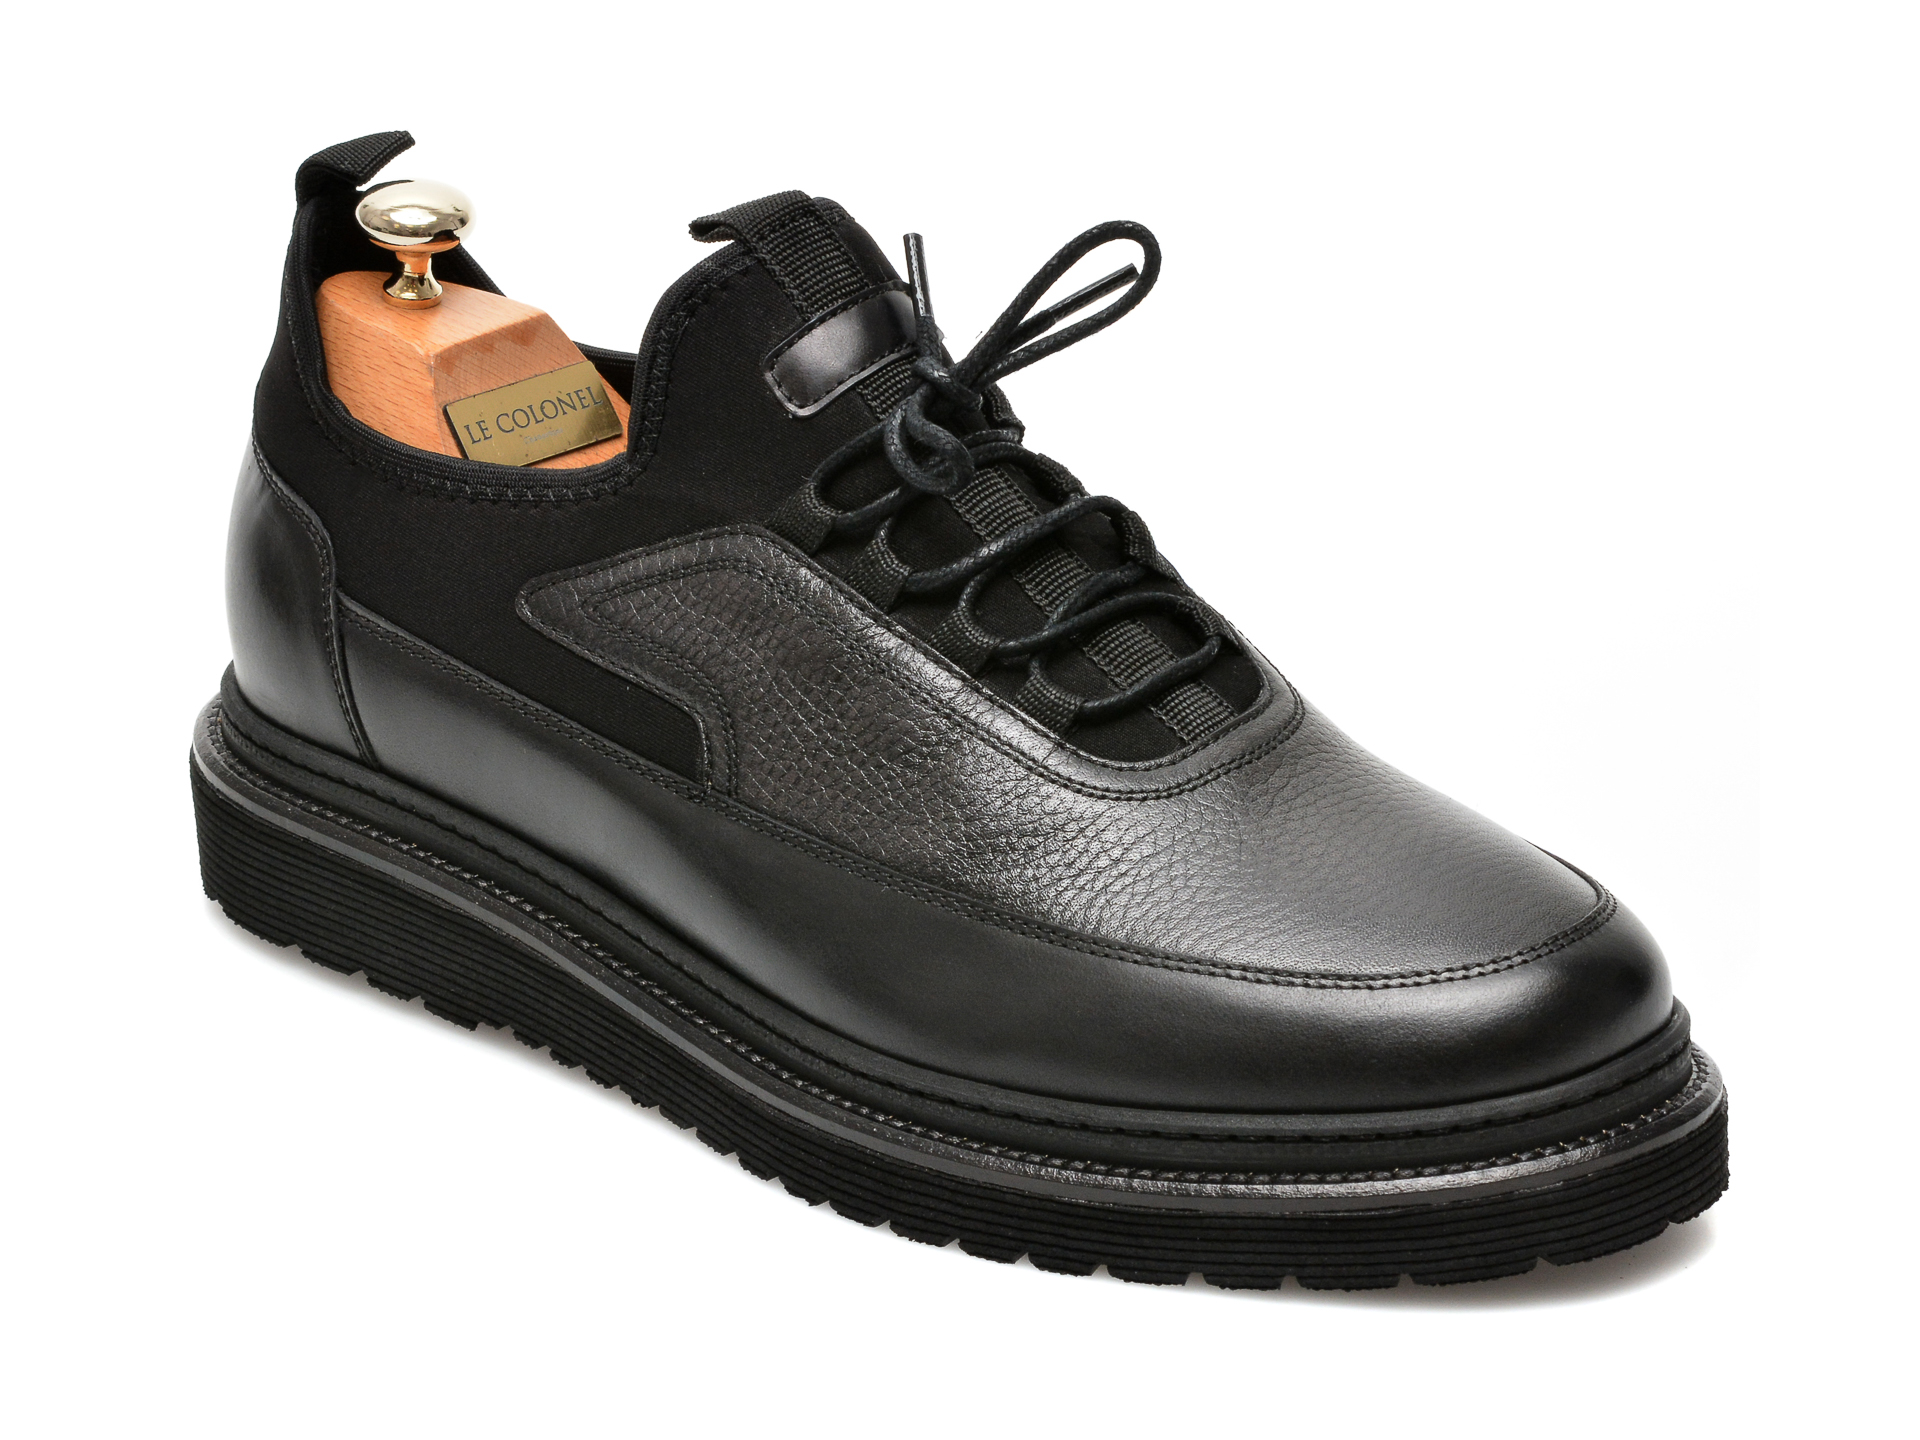 Pantofi LE COLONEL negri, 64816, din material textil si piele naturala Le Colonel imagine 2022 13clothing.ro